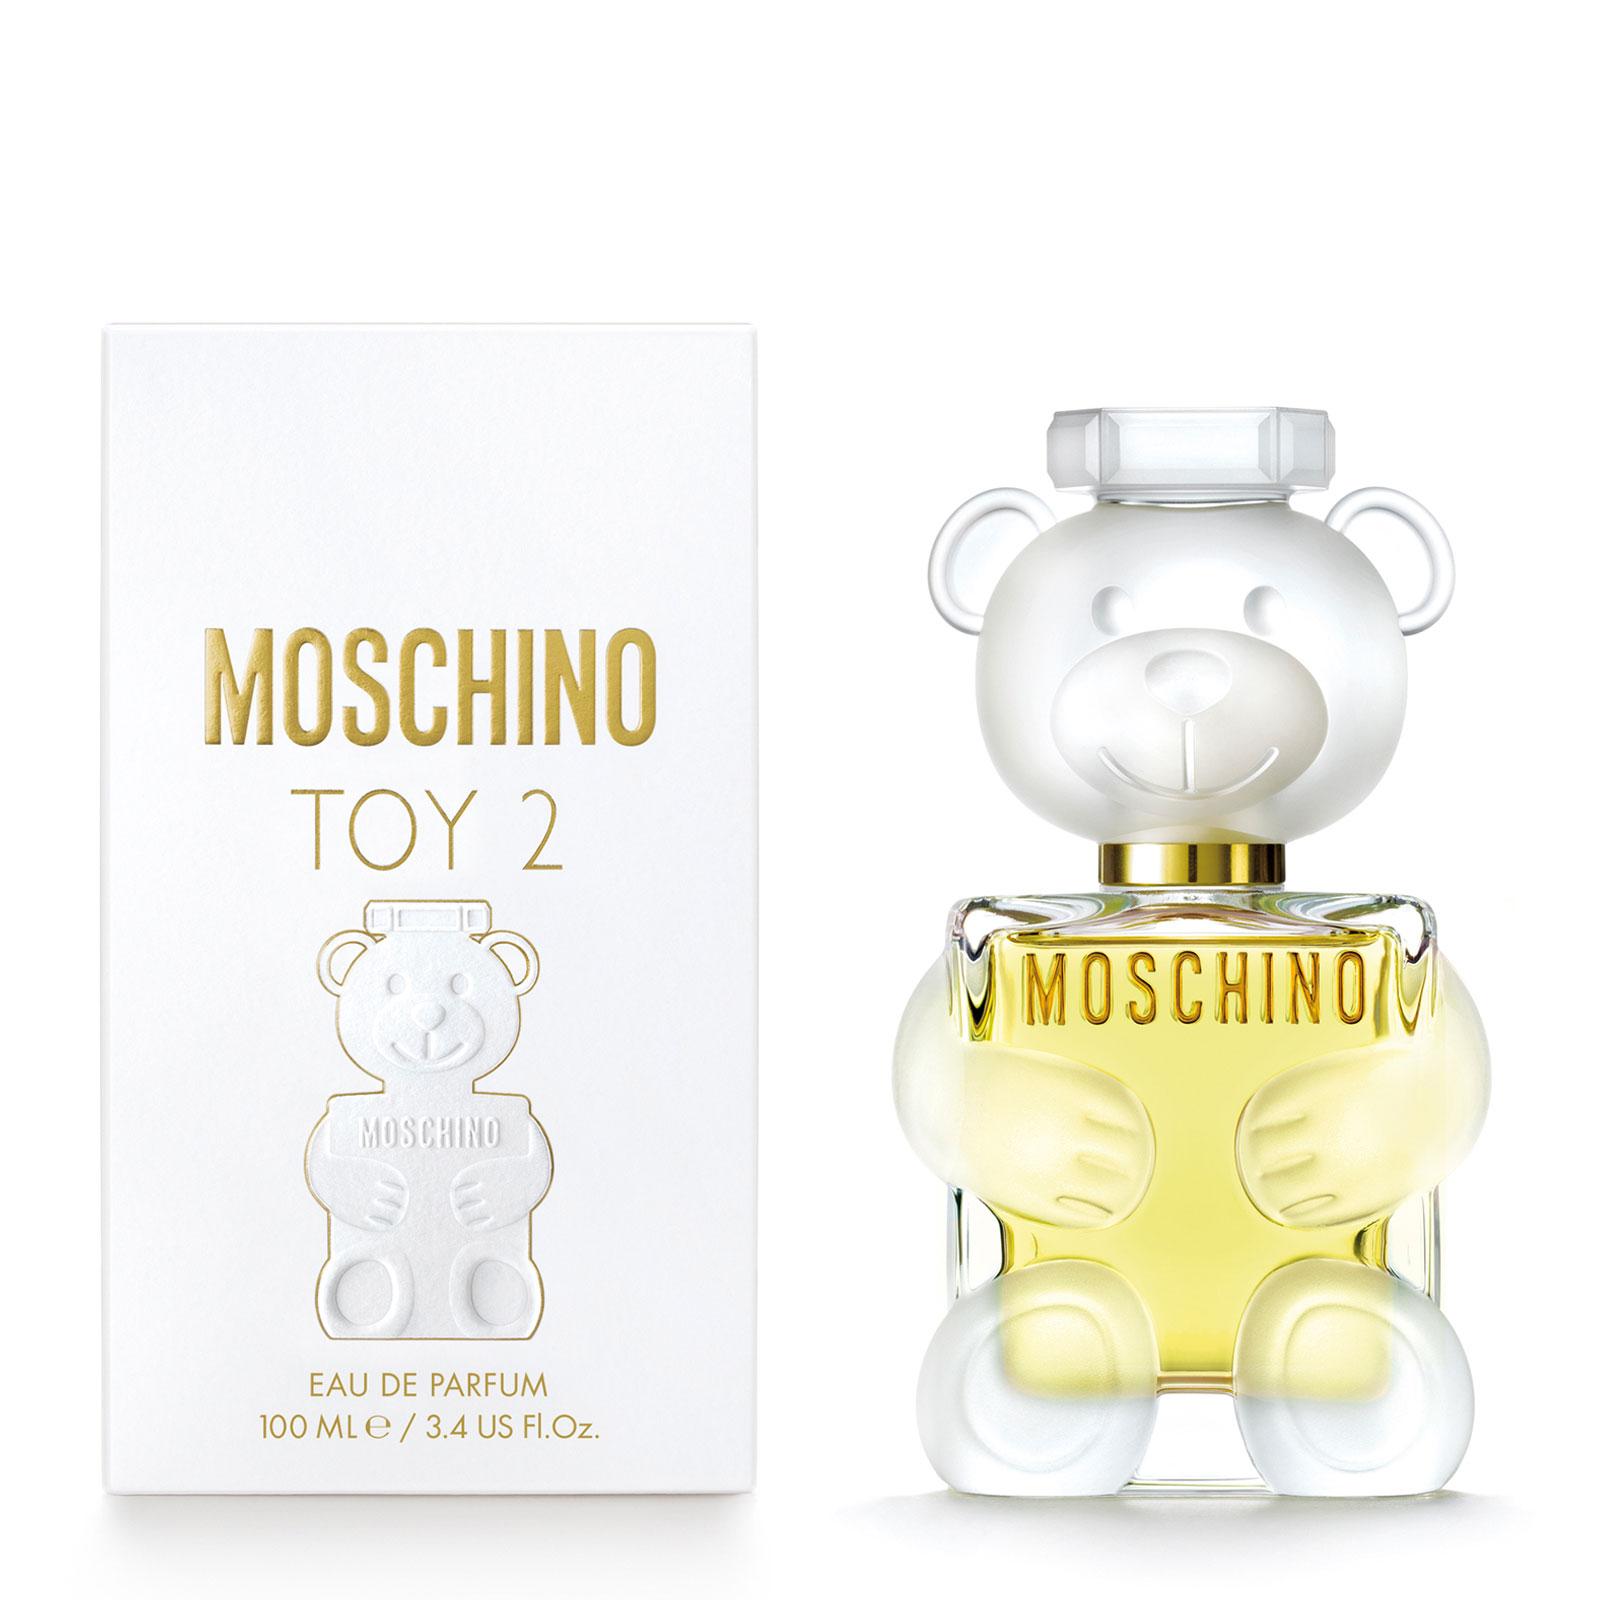 Moschino Toy 2 Eau de Parfum 100ml | FEELUNIQUE